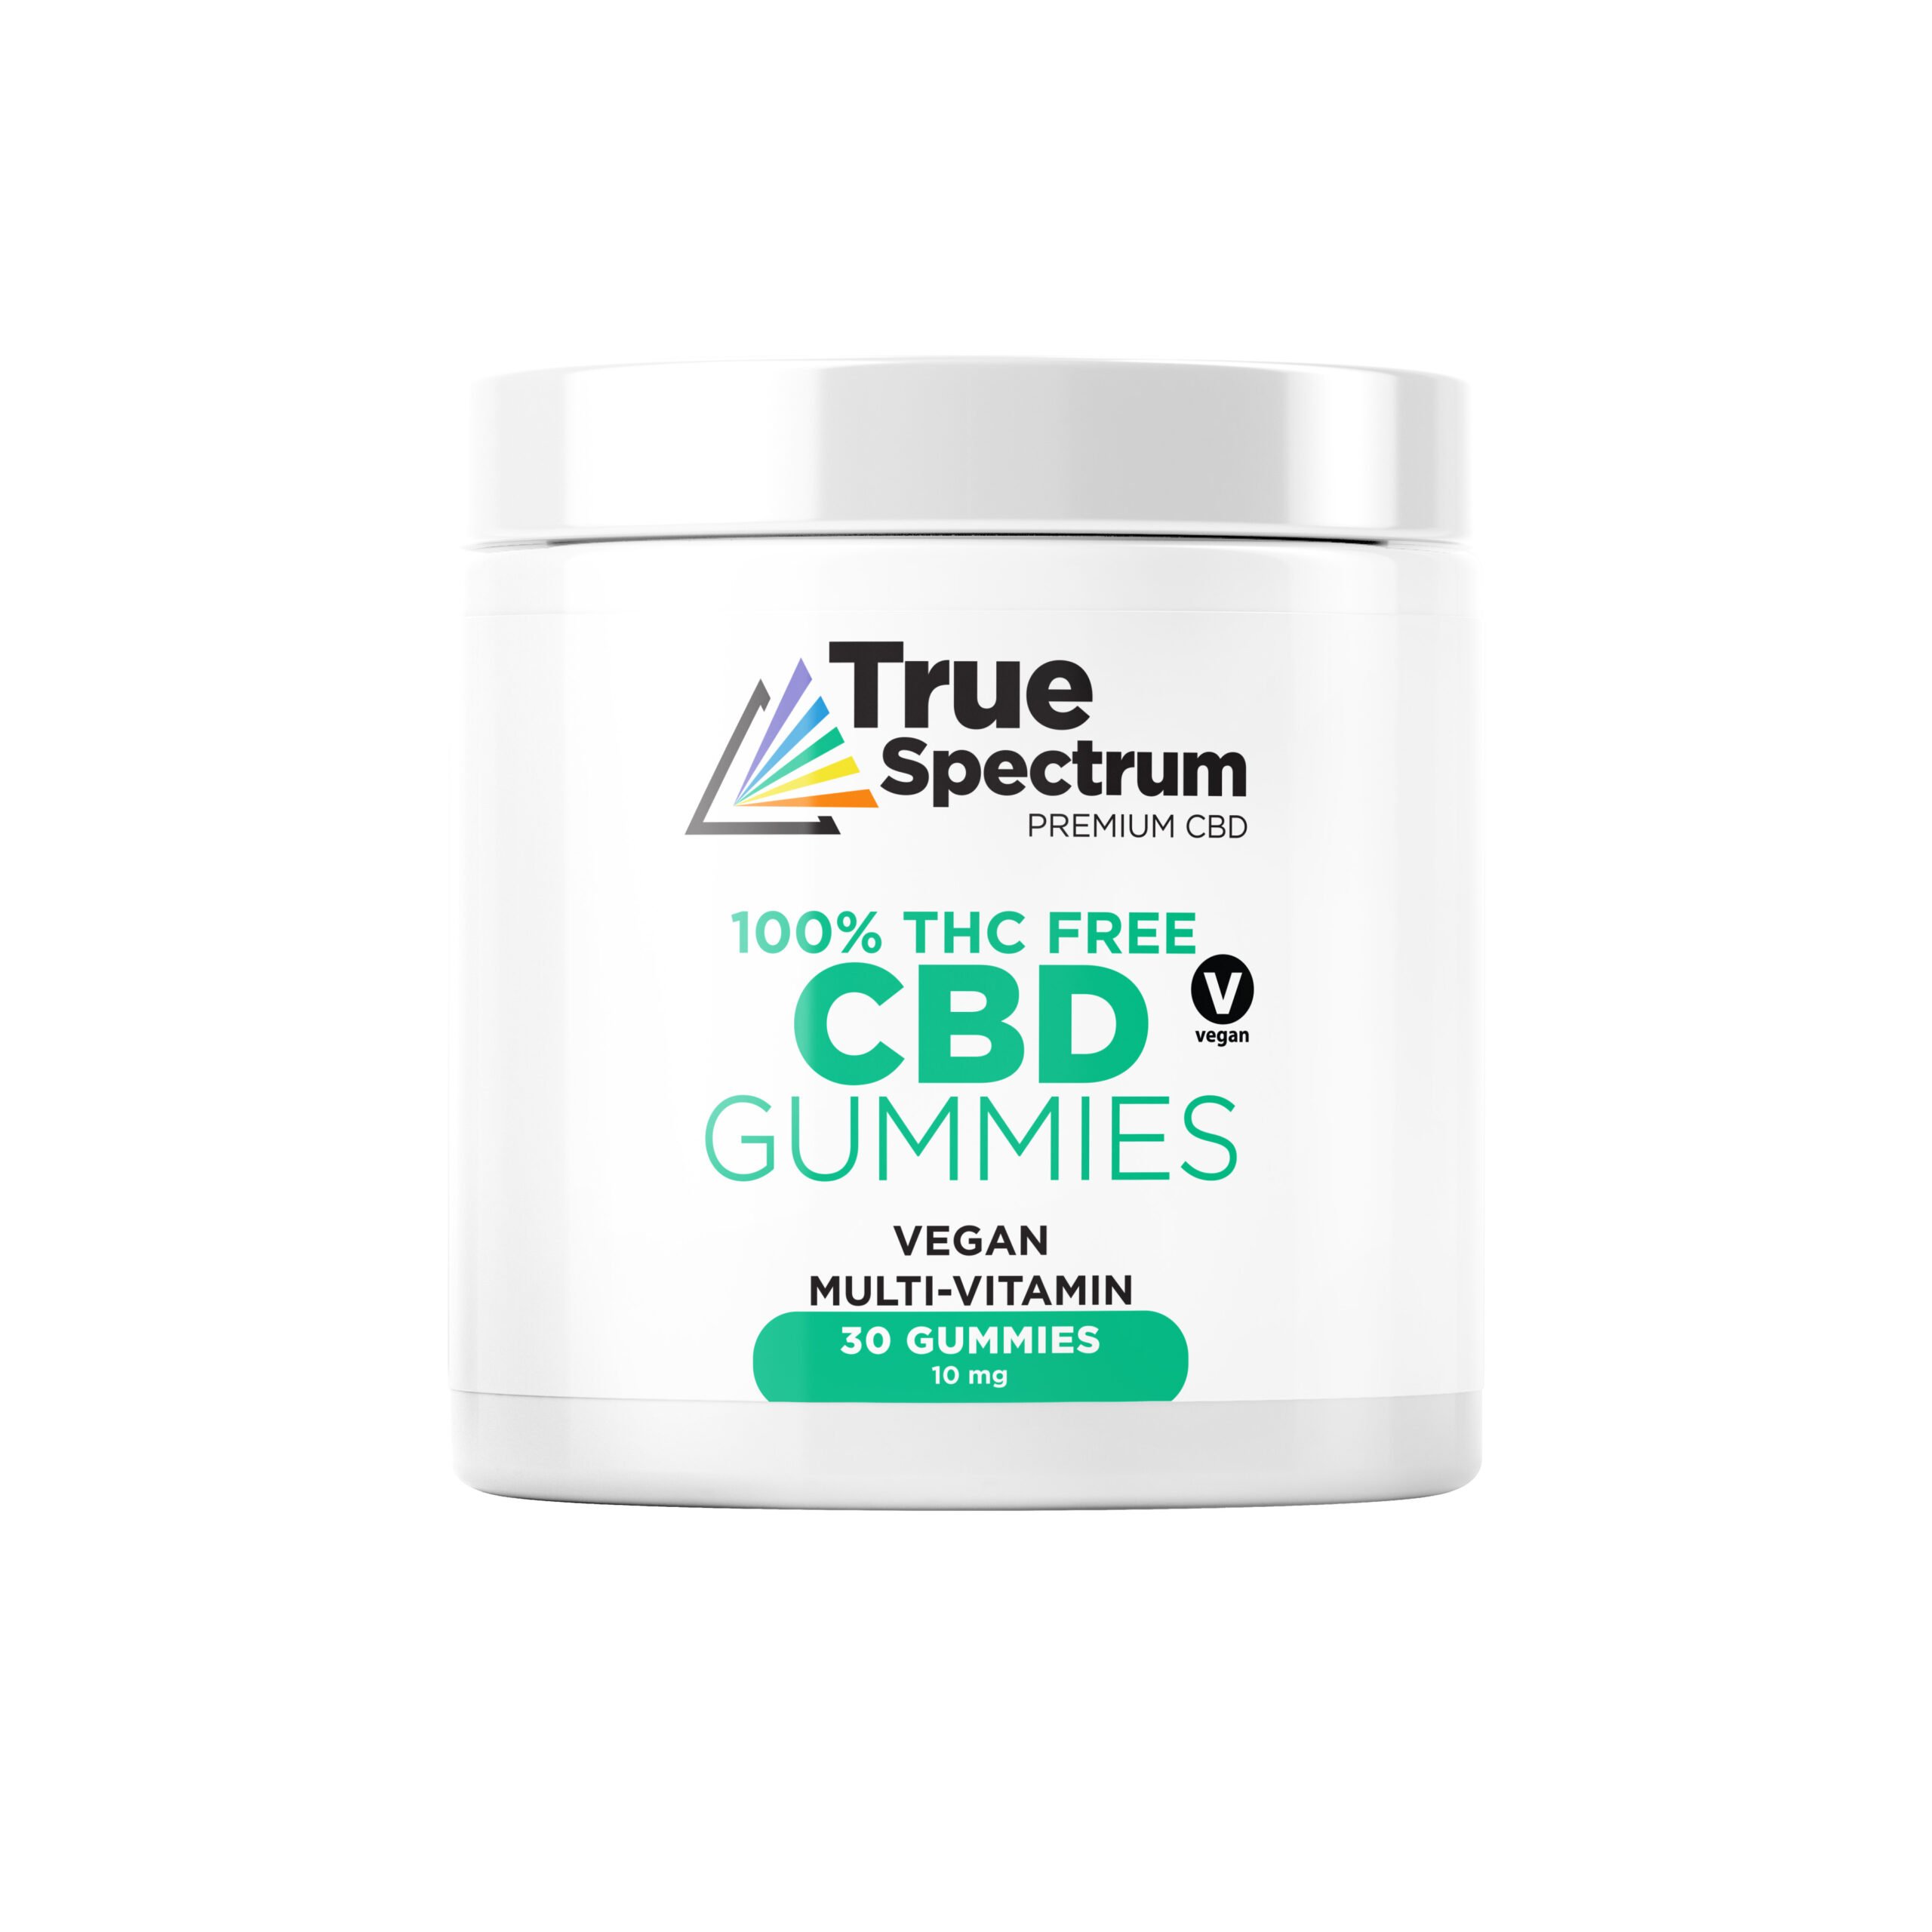 CBD Gummies BY My True Spectrum-Comprehensive Review of the Best CBD Gummies